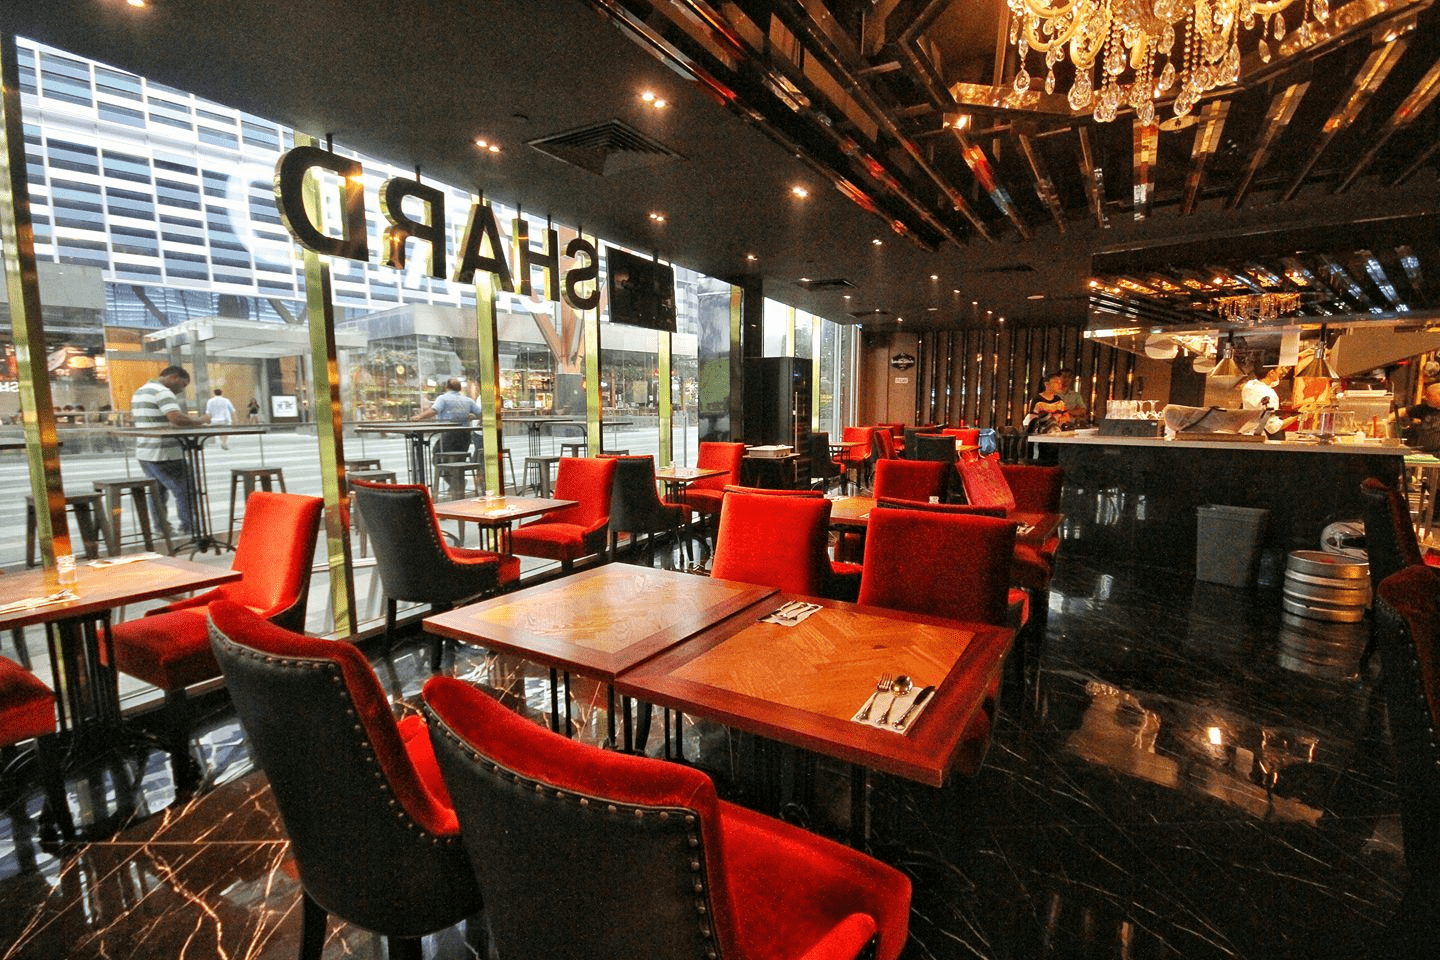 Feb 2018 cafes and restaurants (40) - Shard Restaurant & Bar interior